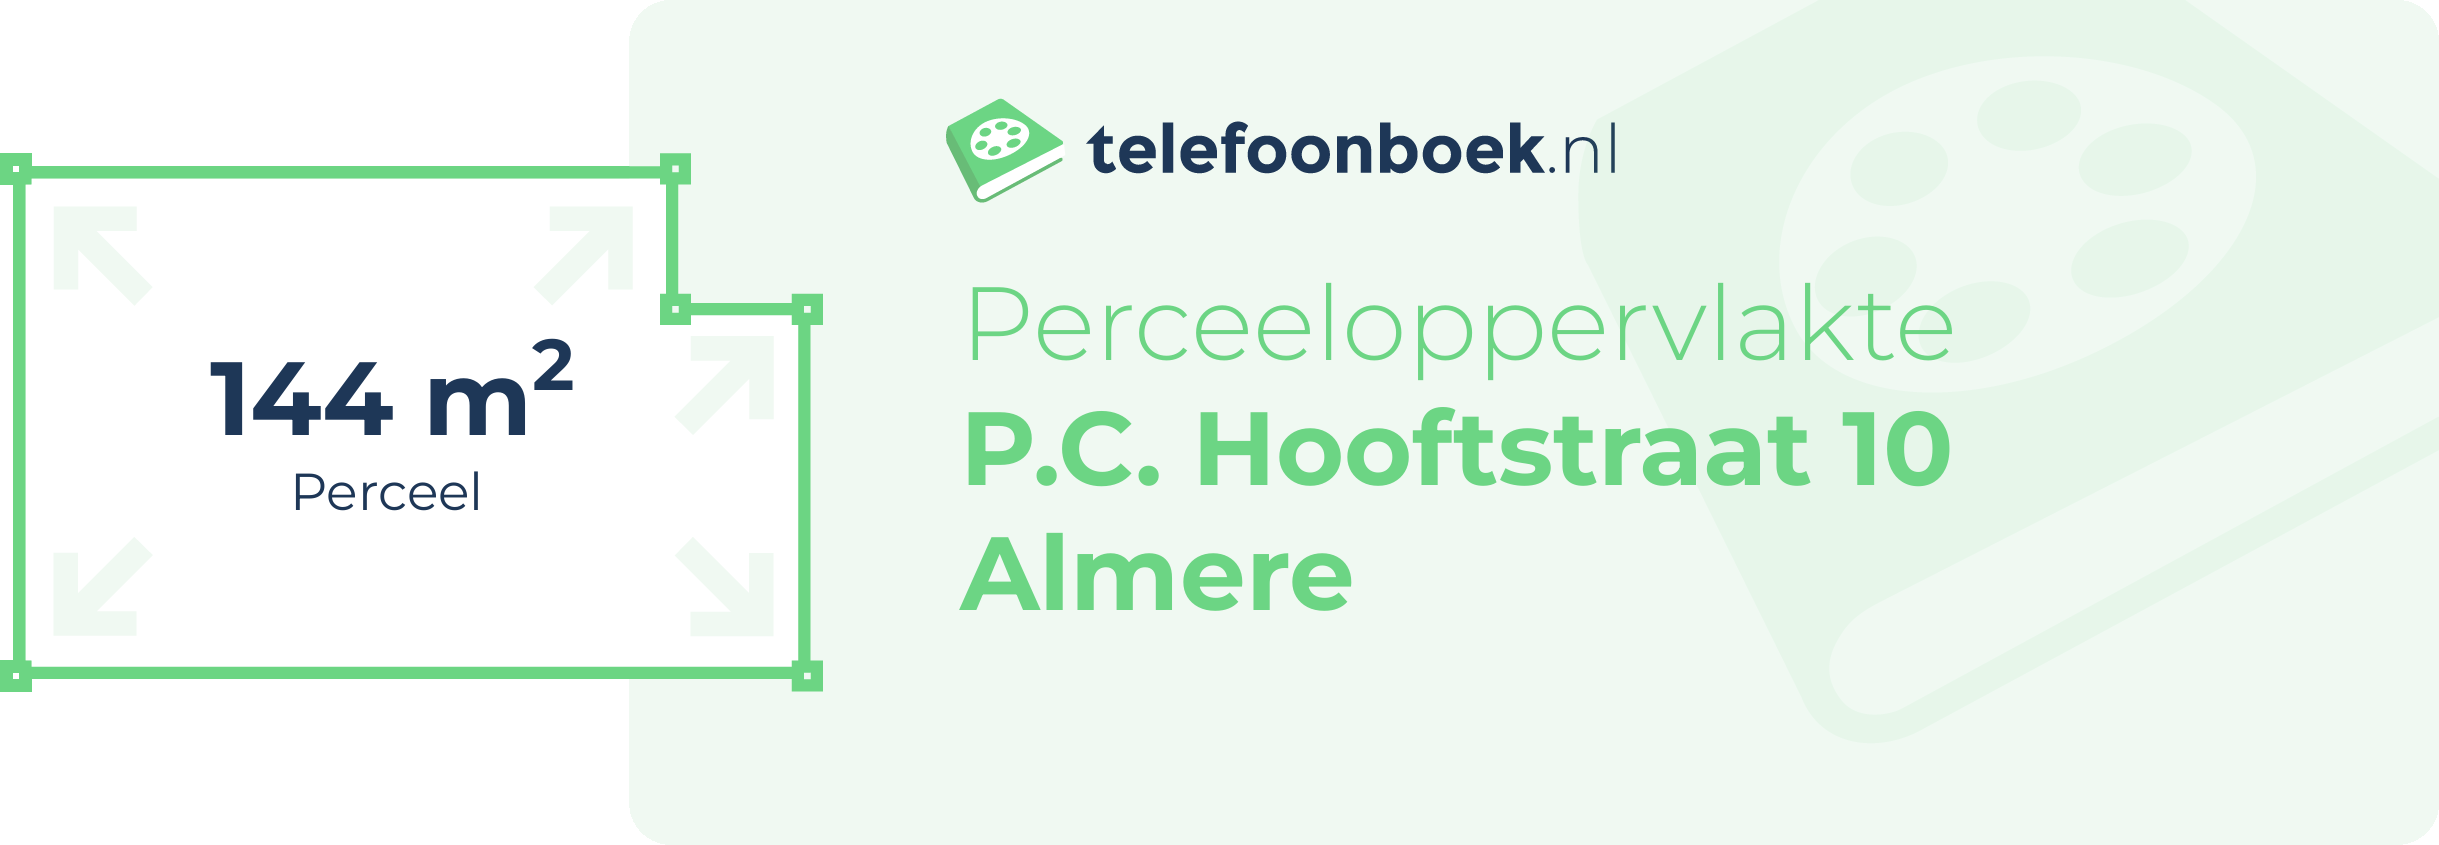 Perceeloppervlakte P.C. Hooftstraat 10 Almere